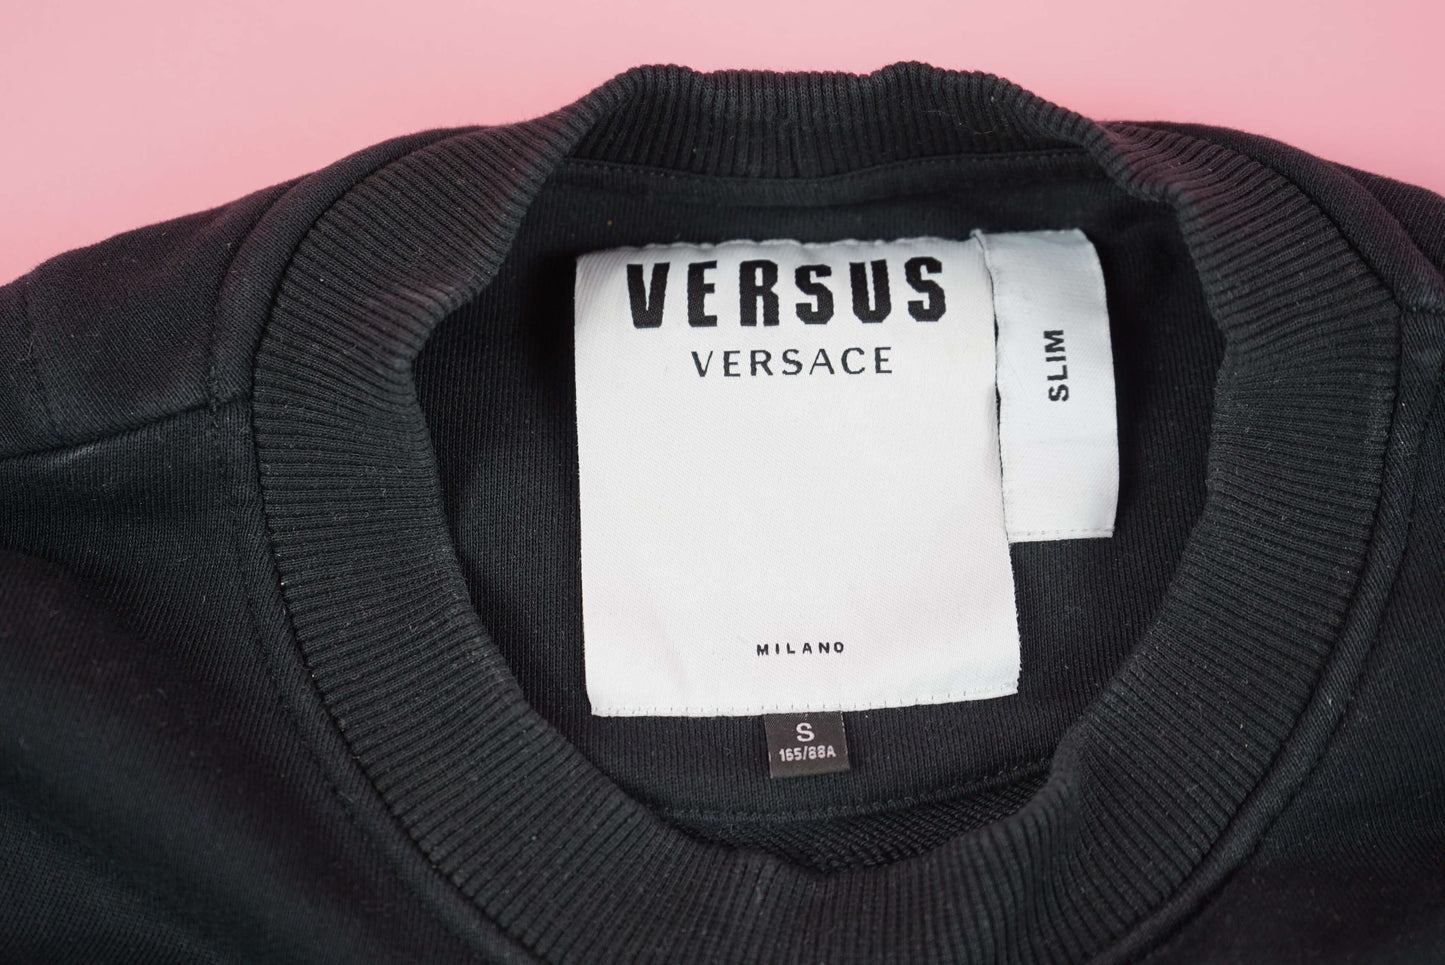 Authentic Versace Versus Black Jumper Sweatshirt Slim Fit Size S-M